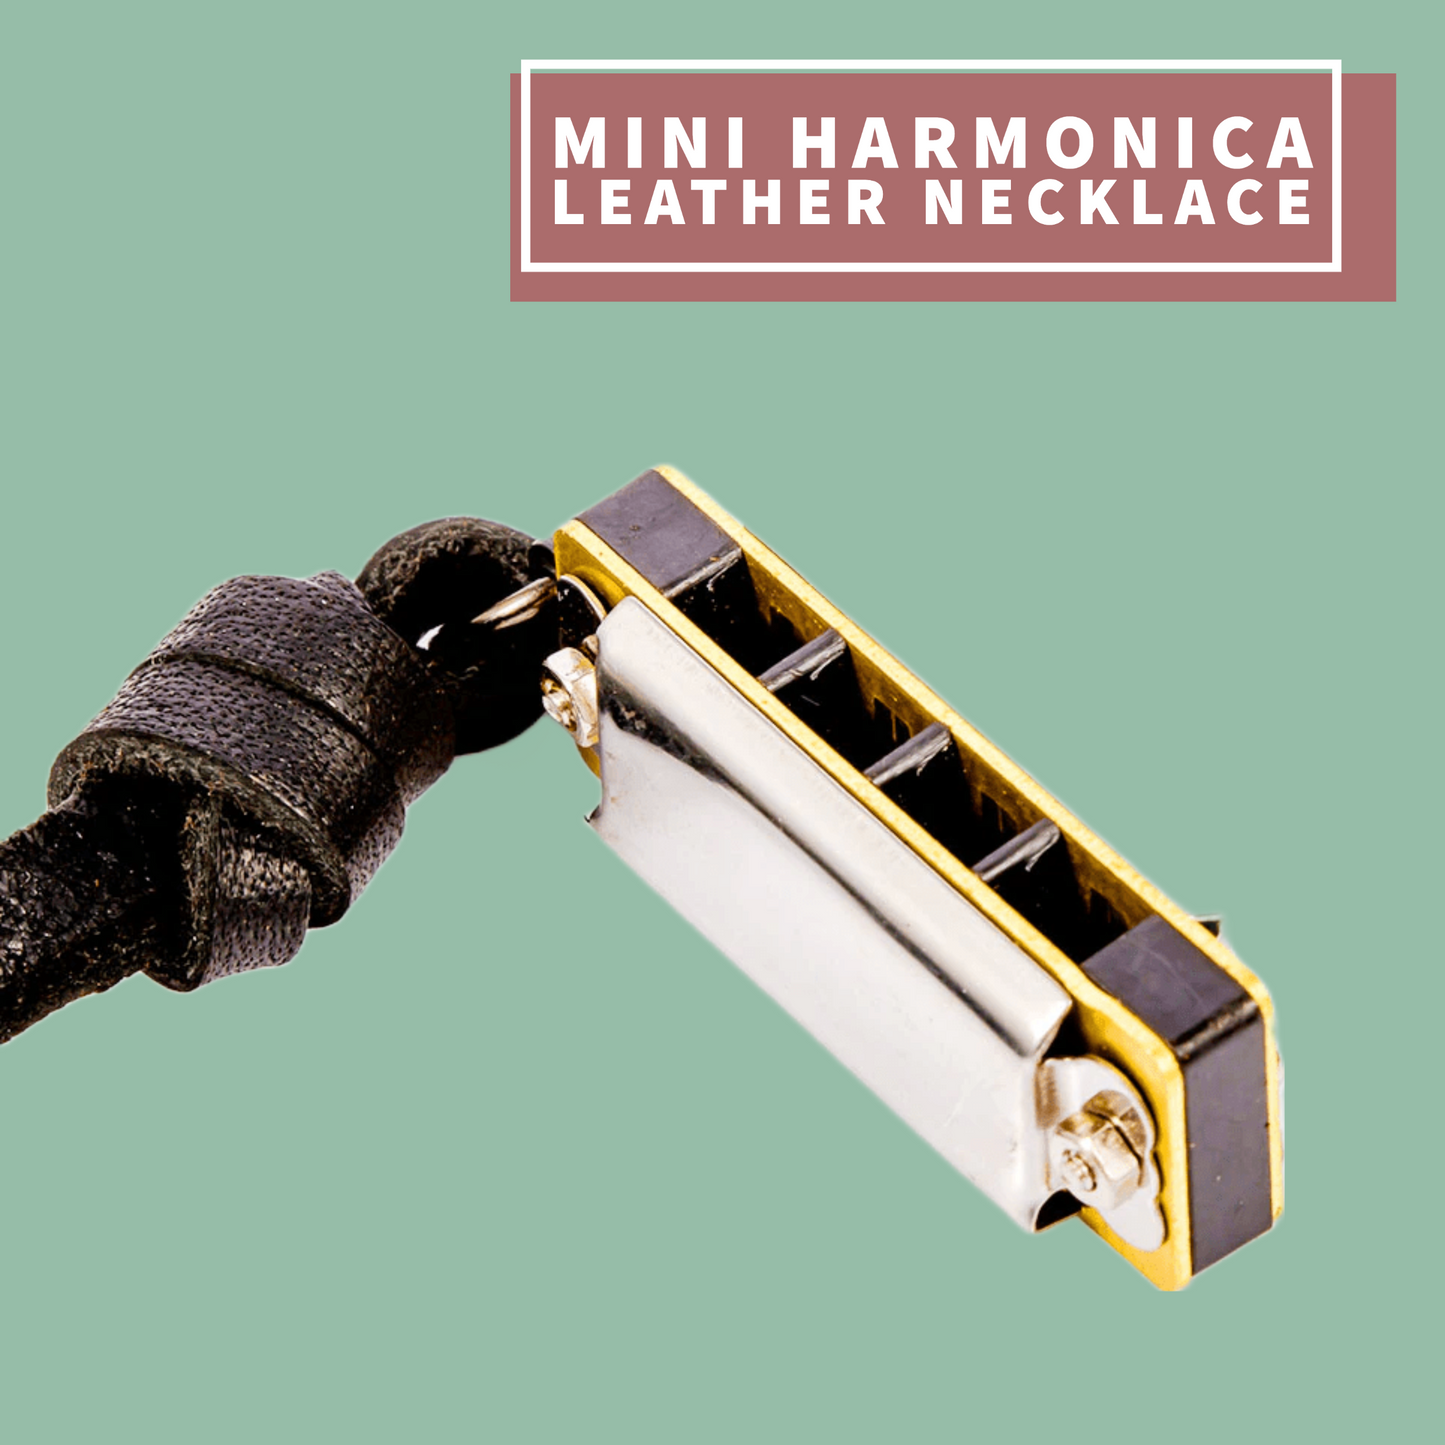 Mini Harmonica Leather Necklace (Brown)